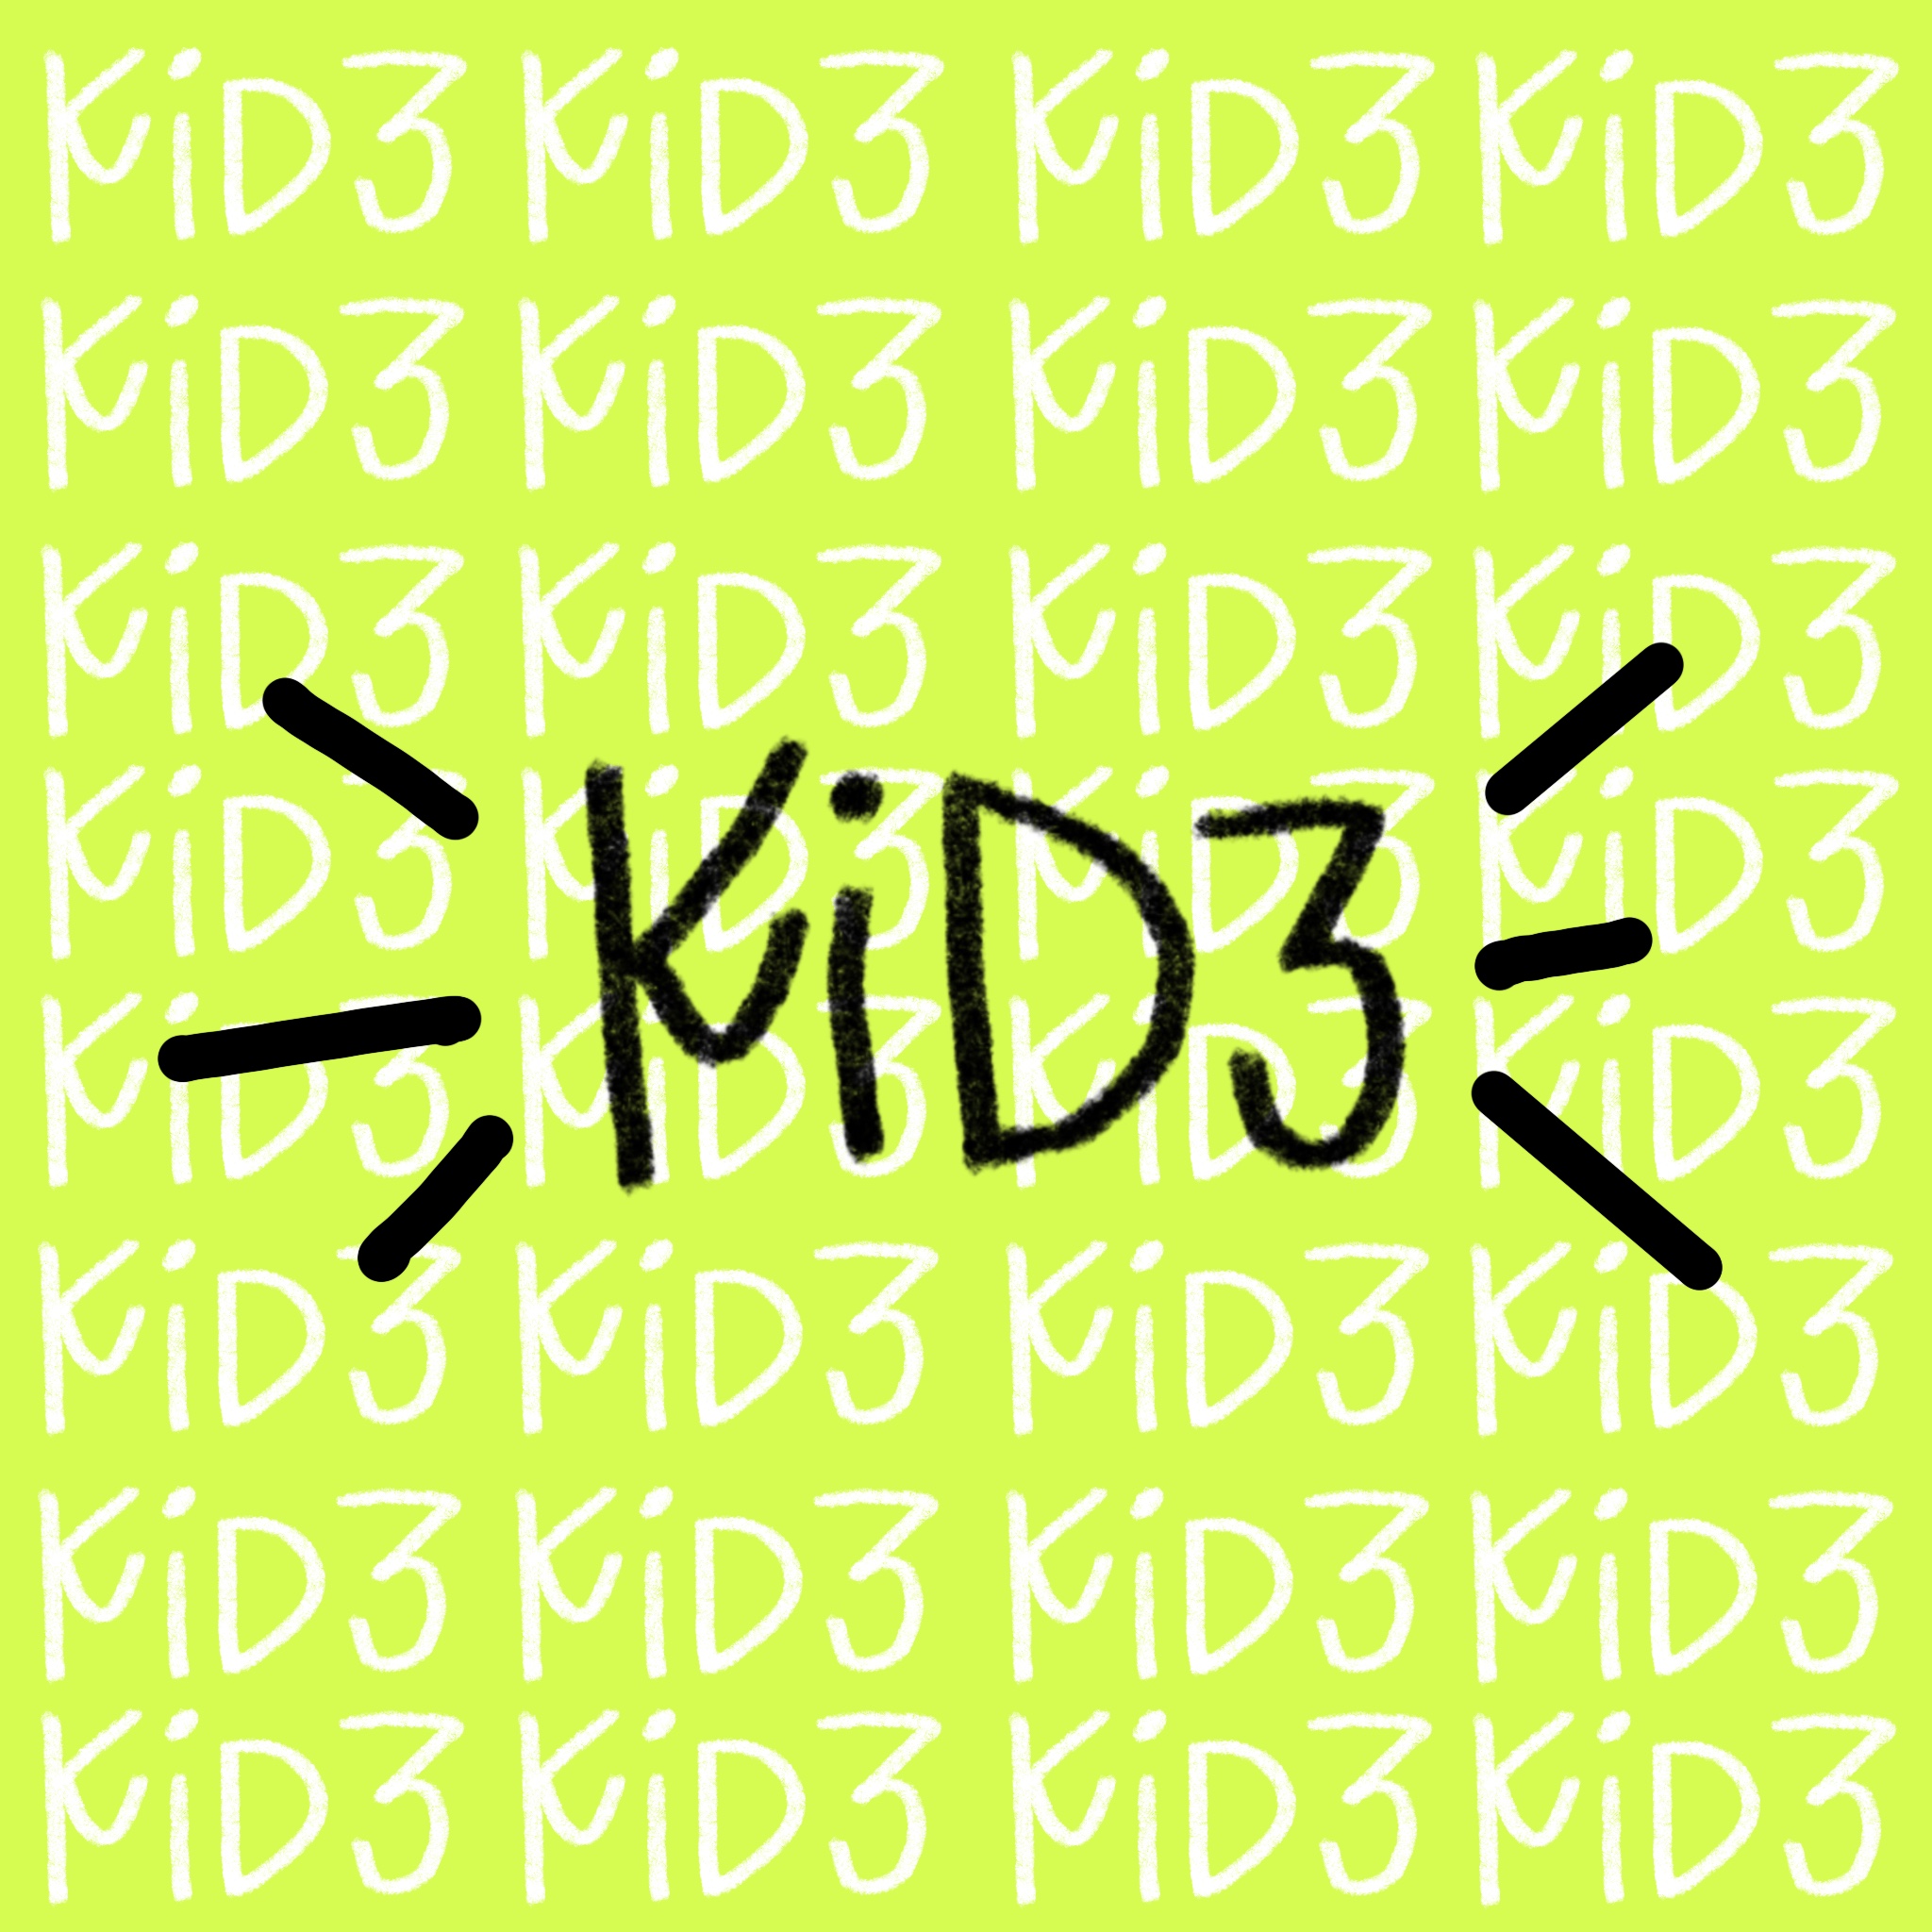 Kid3_Co